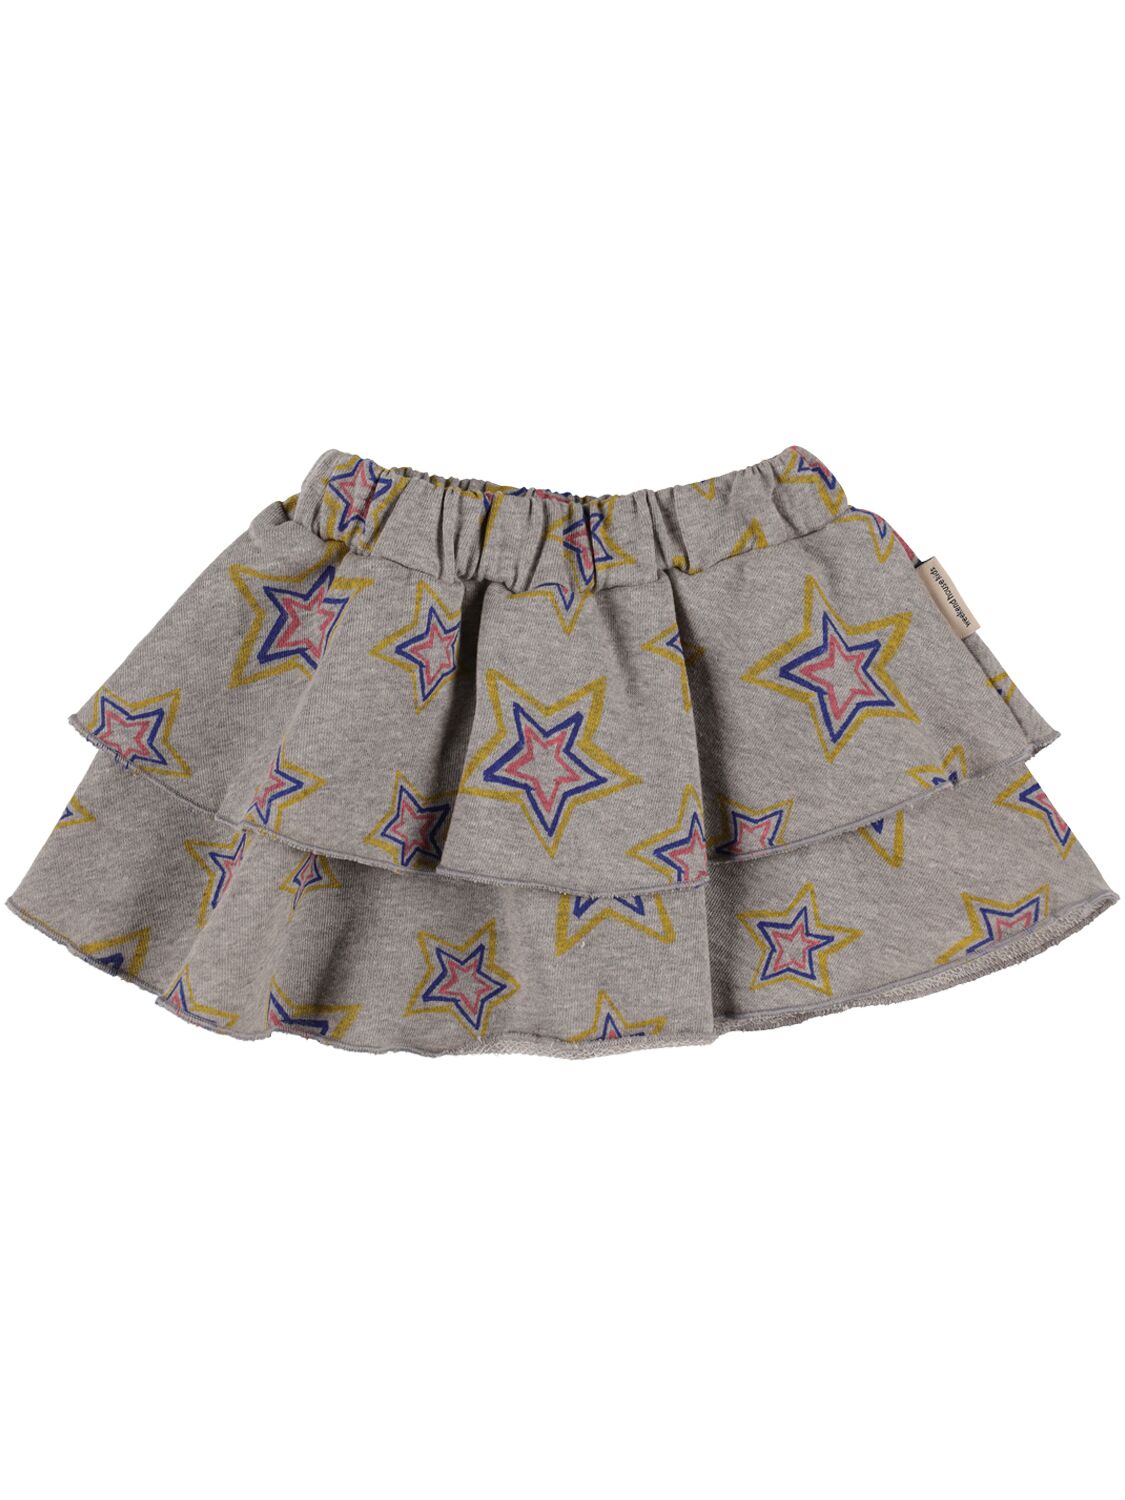 Image of Printed Cotton Skirt